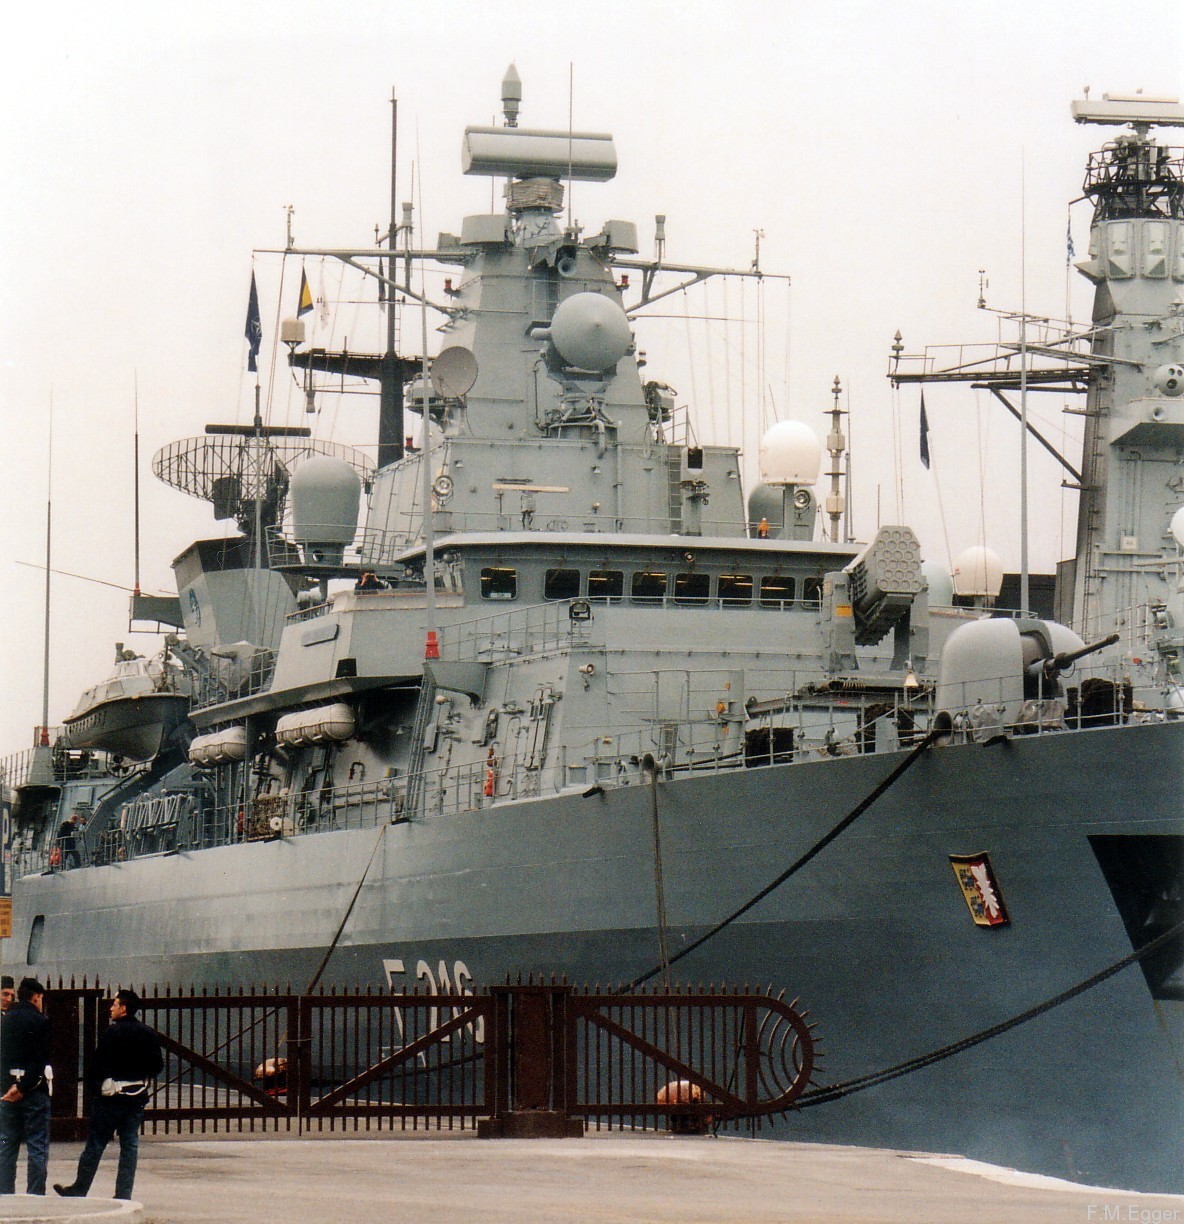 f-216 fgs schleswig holstein type 123 class frigate german navy nato stanavformed snfm trieste italy 2003 24